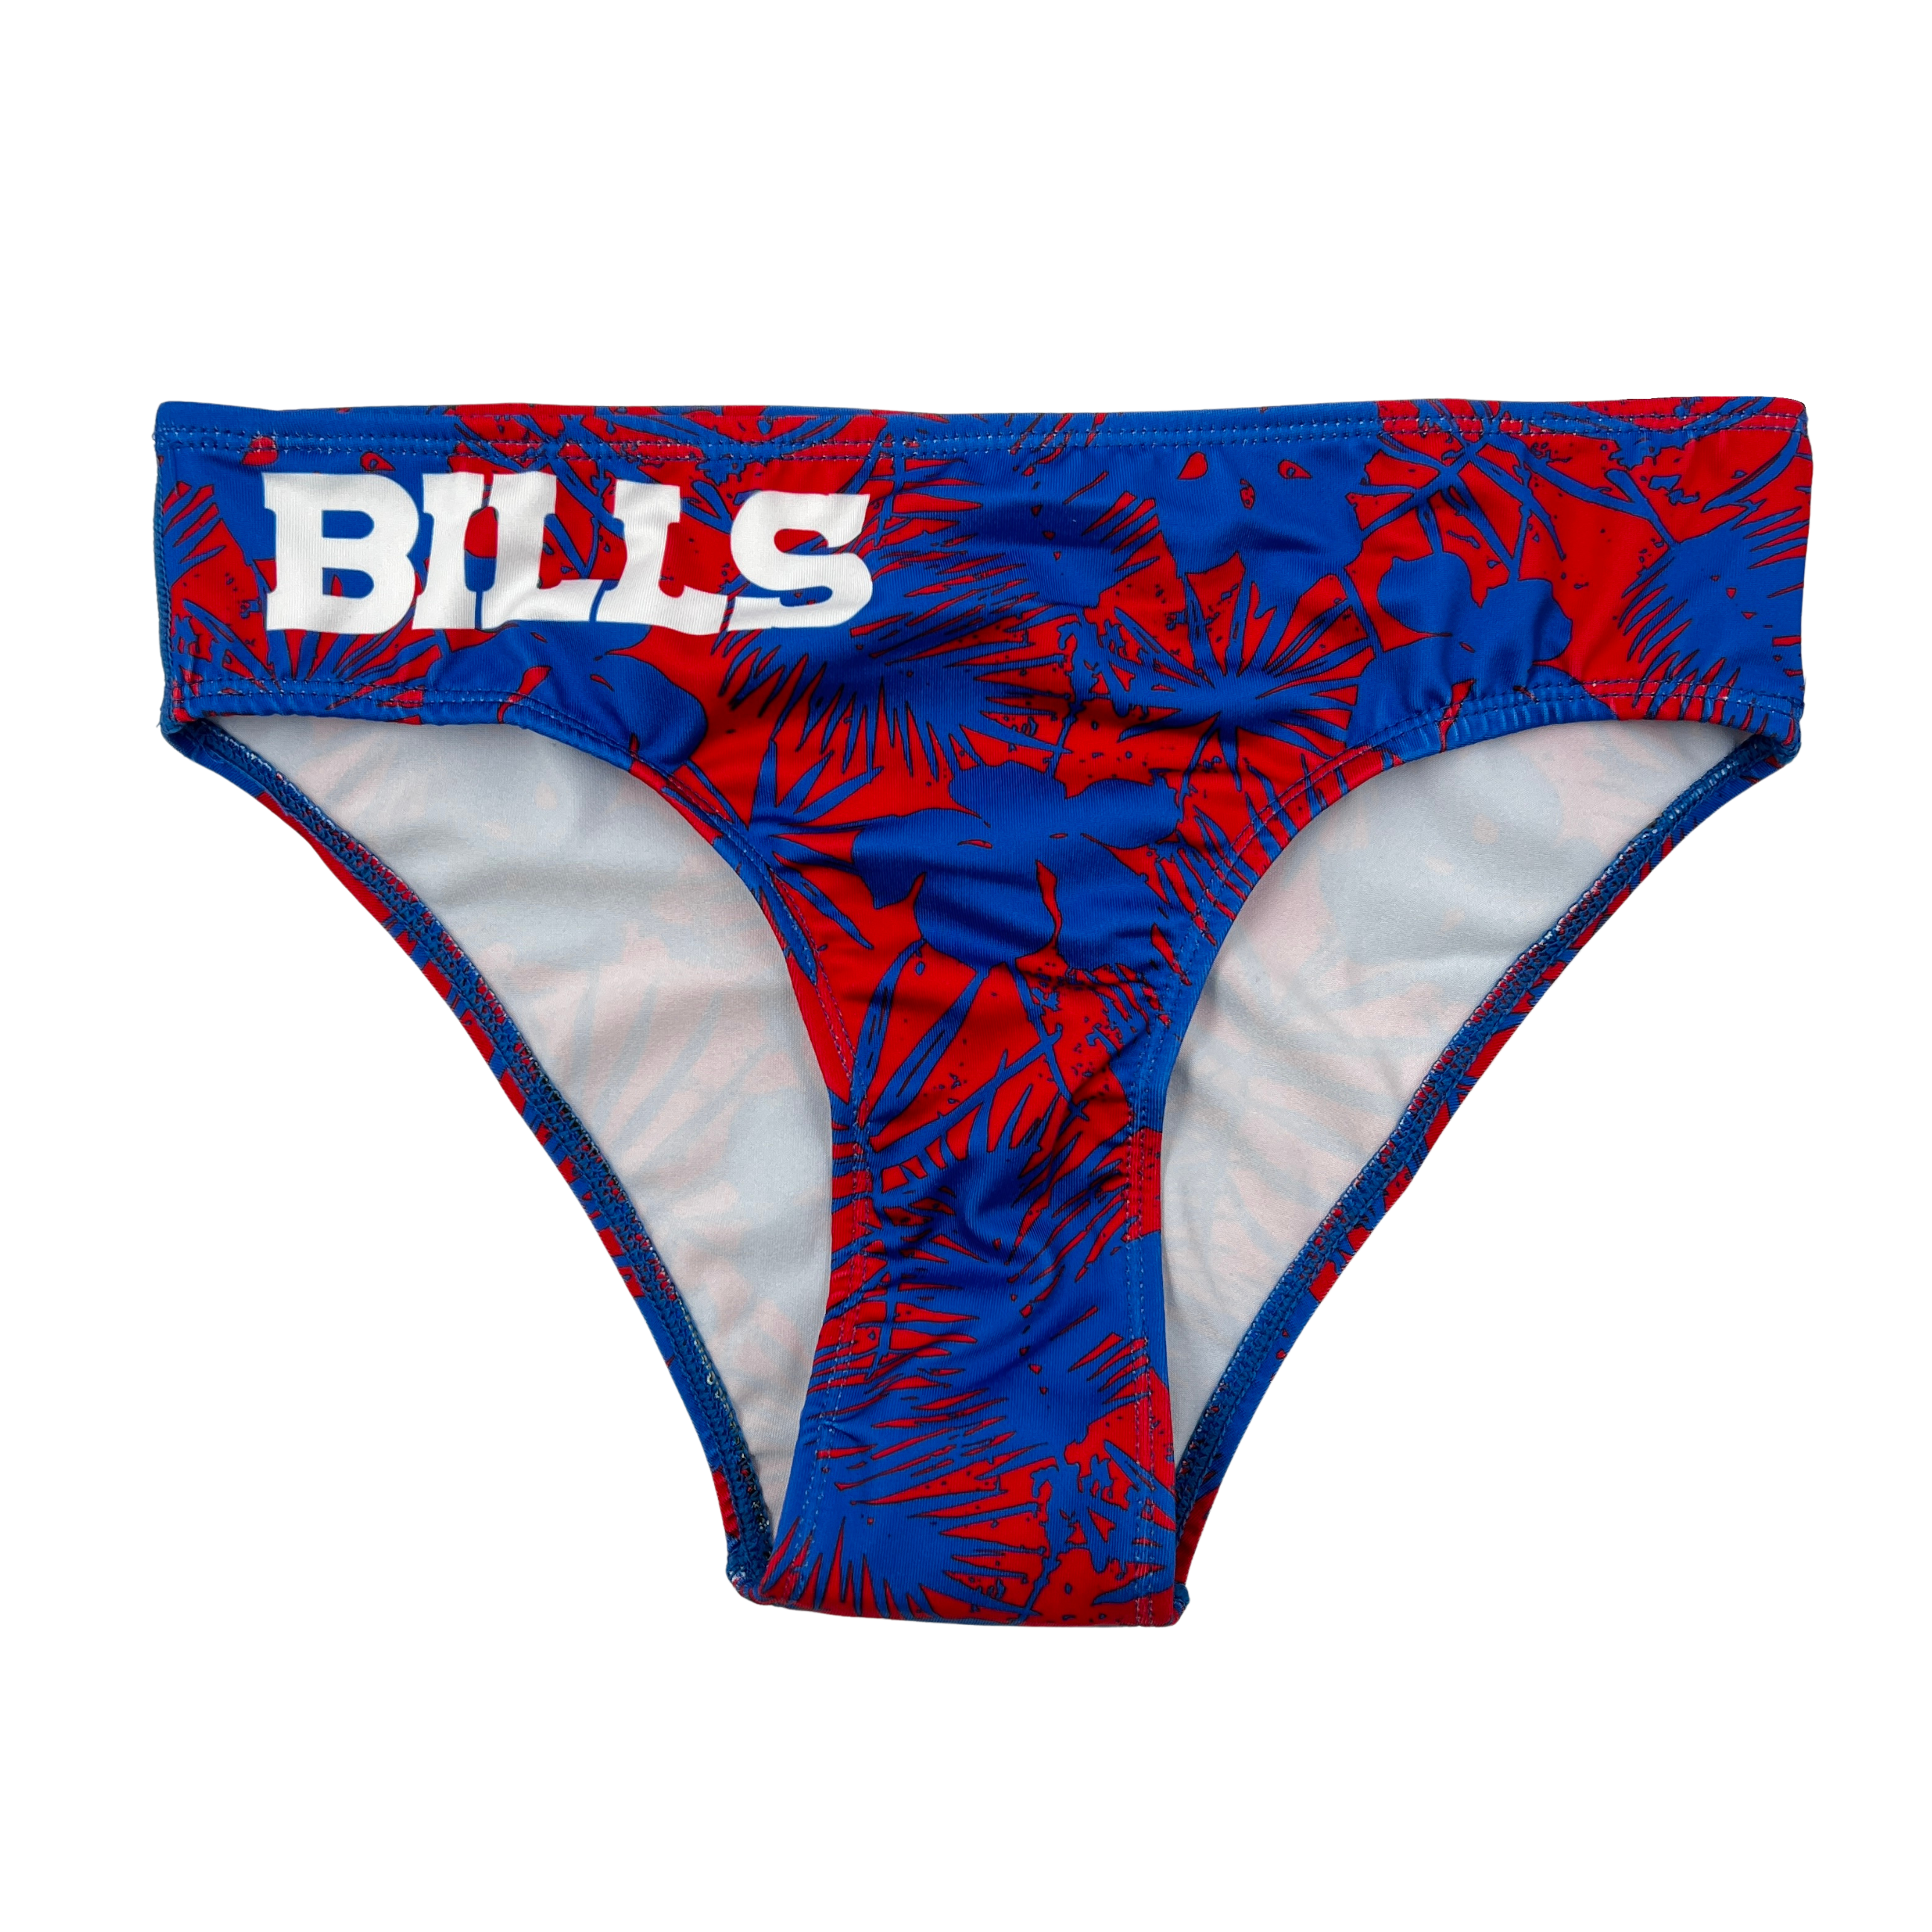 buffalo bills bathing suit